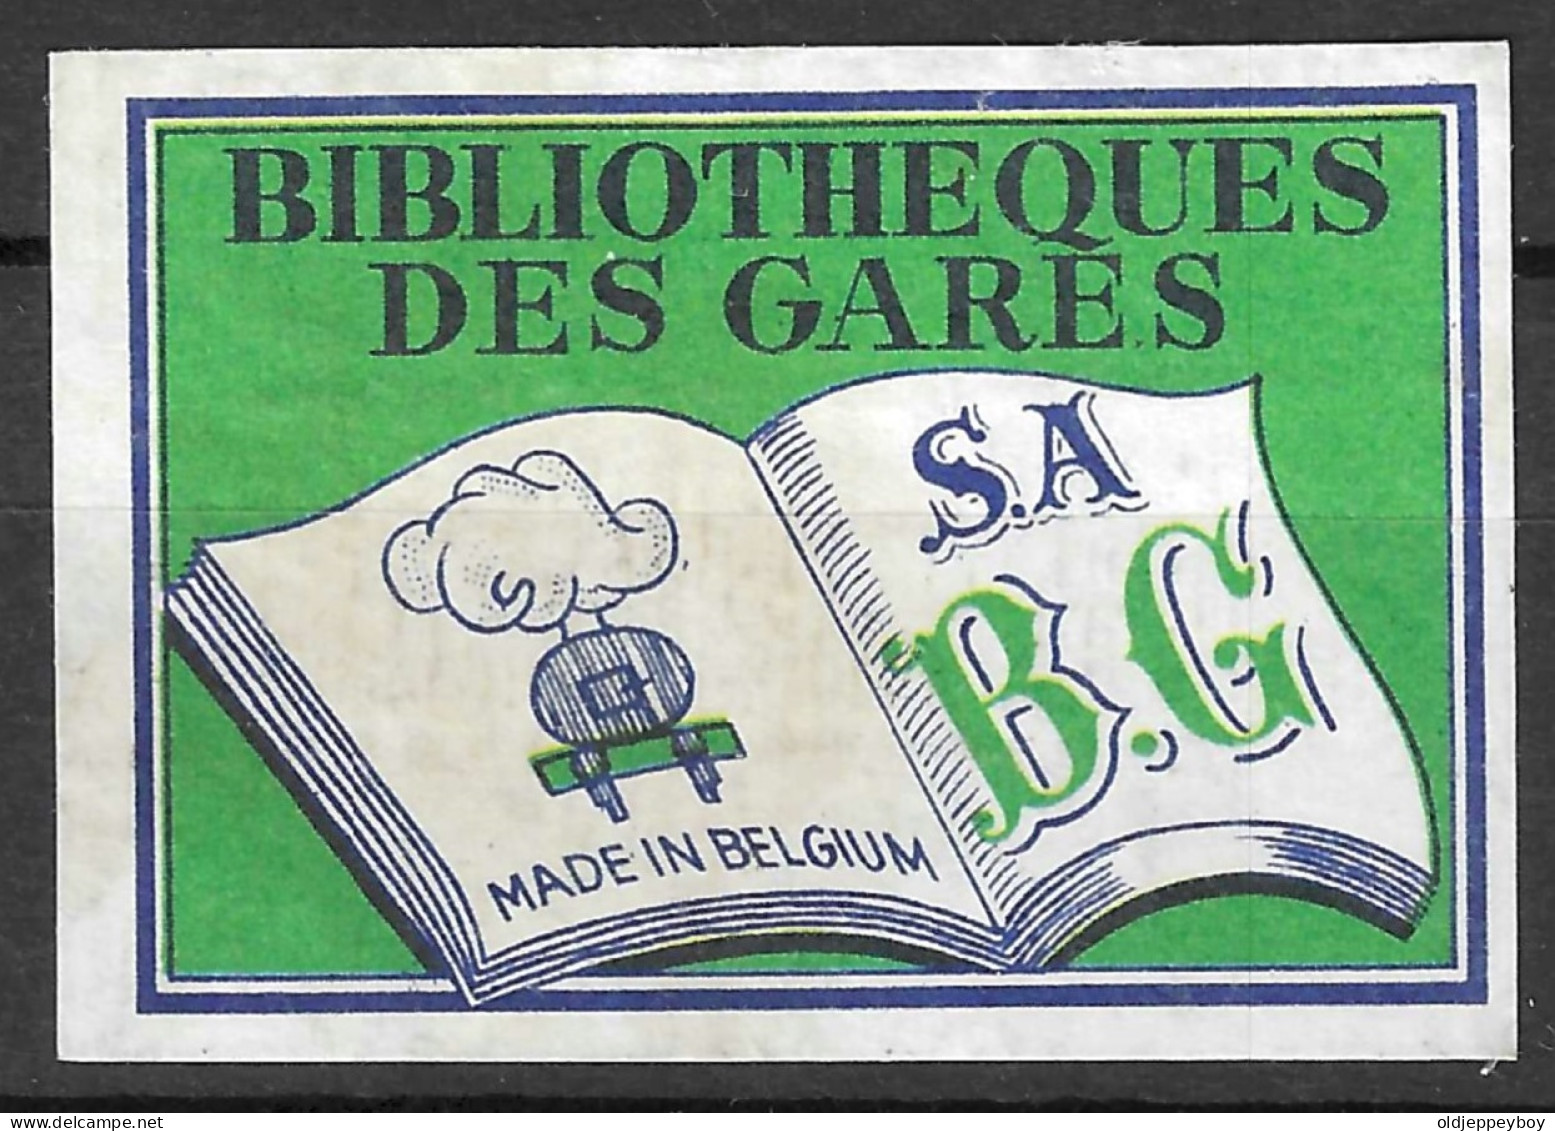  VINTAGE MATCHBOX LABEL BELGIUM BIBLIOTHEQUES DES GARES   5  X 3.5  Cm  - Zündholzschachteletiketten